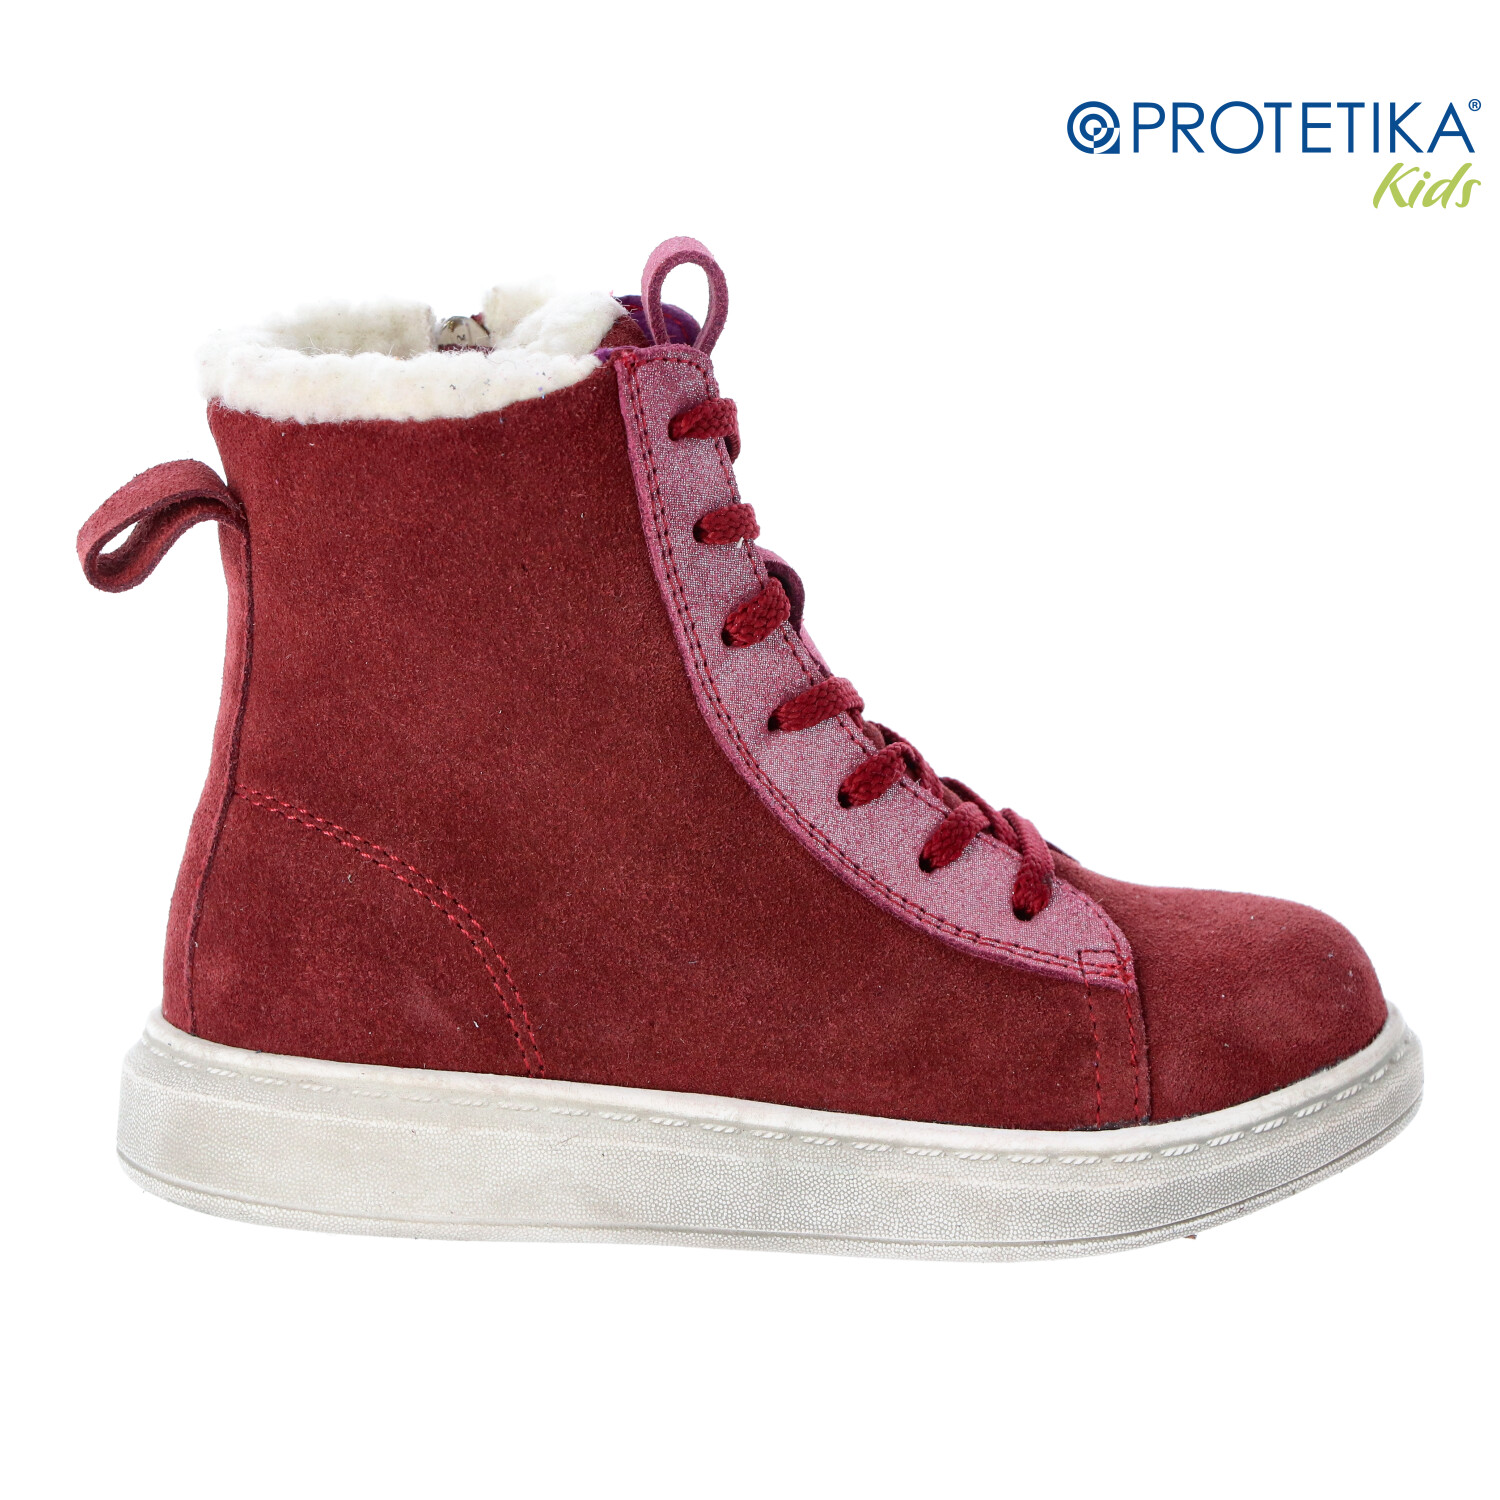 Protetika - zimné topánky s kožušinkou AJKA bordo